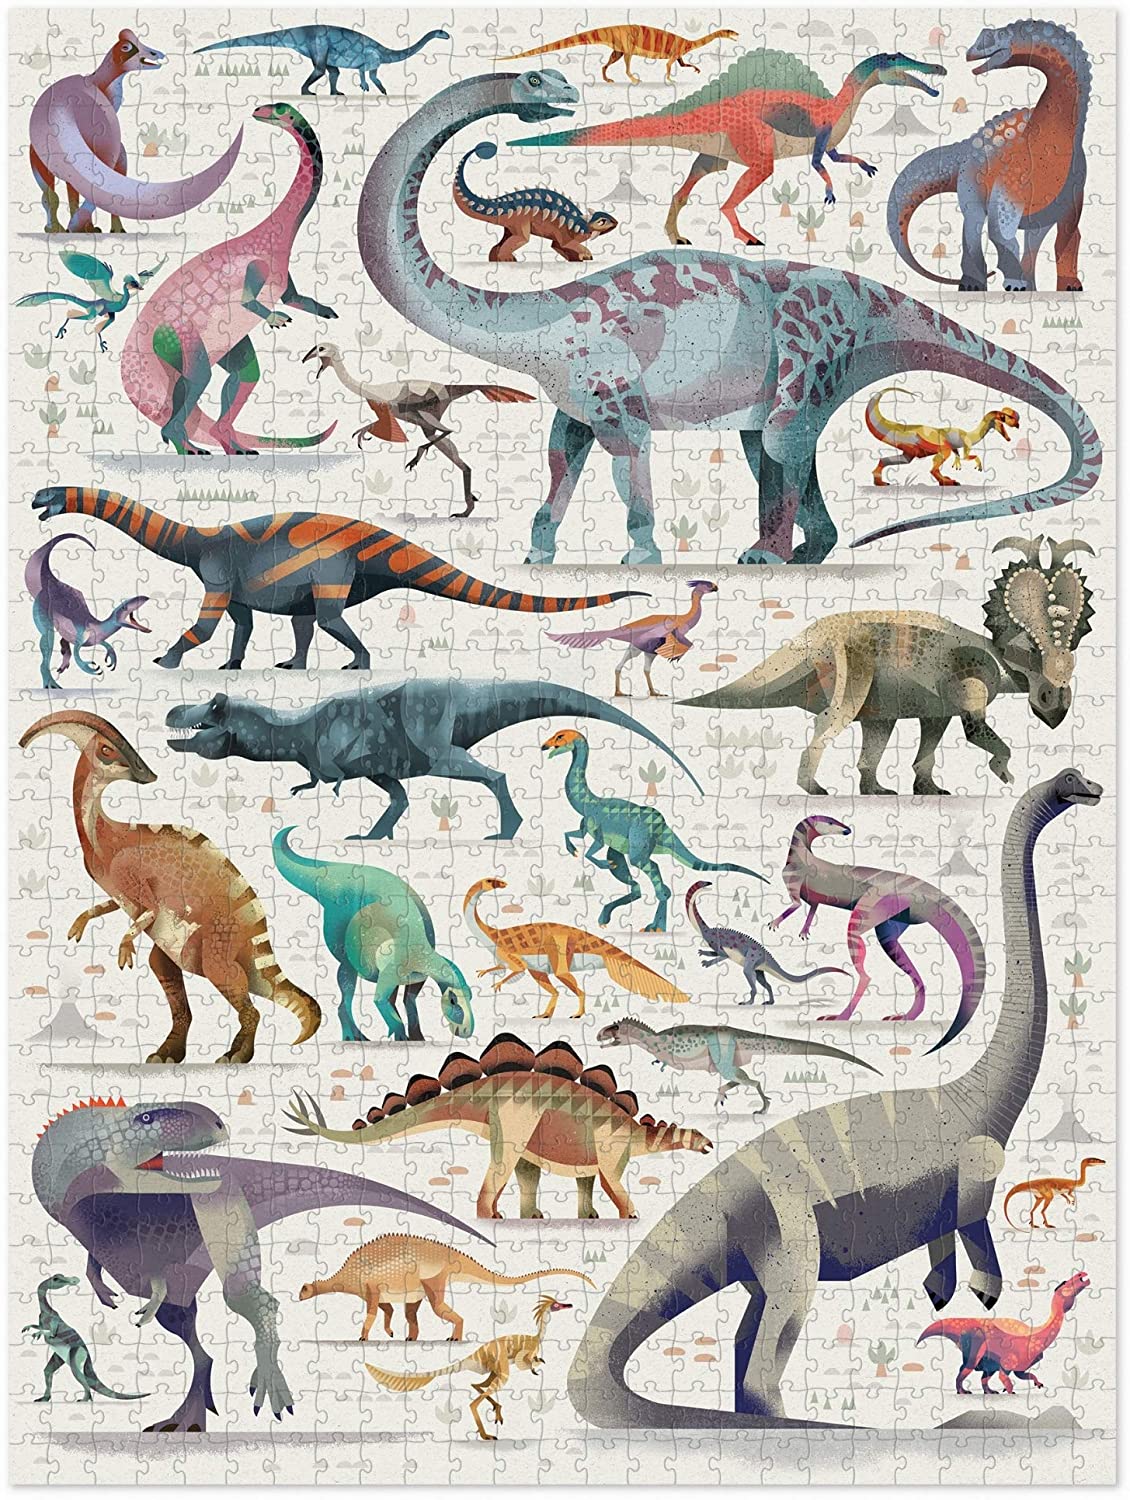 Dinosaur Puzzle- World of Dinosaurs – 750-piece (Crocodile Creek)